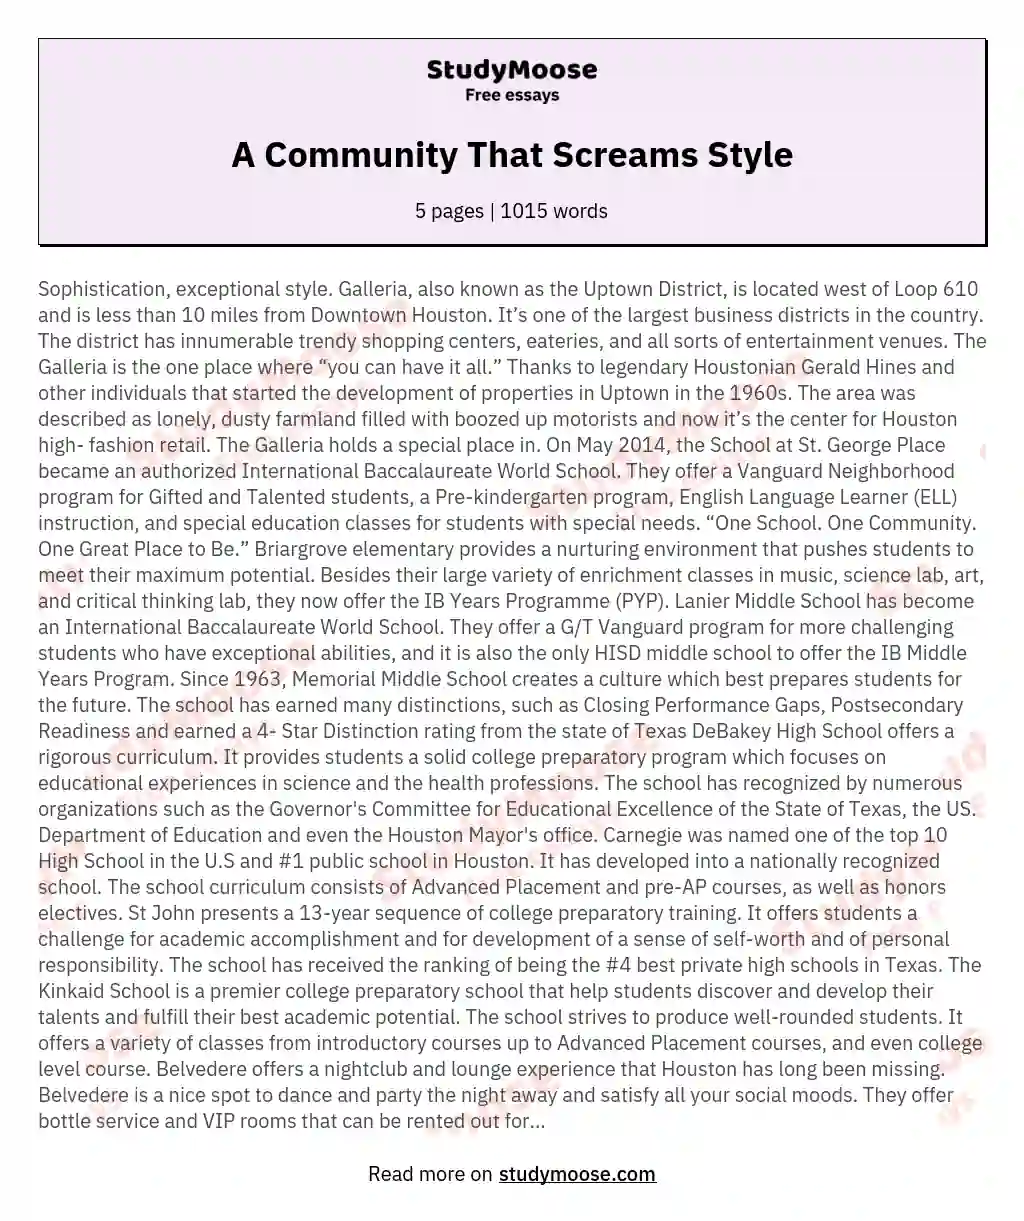 A Community That Screams Style essay